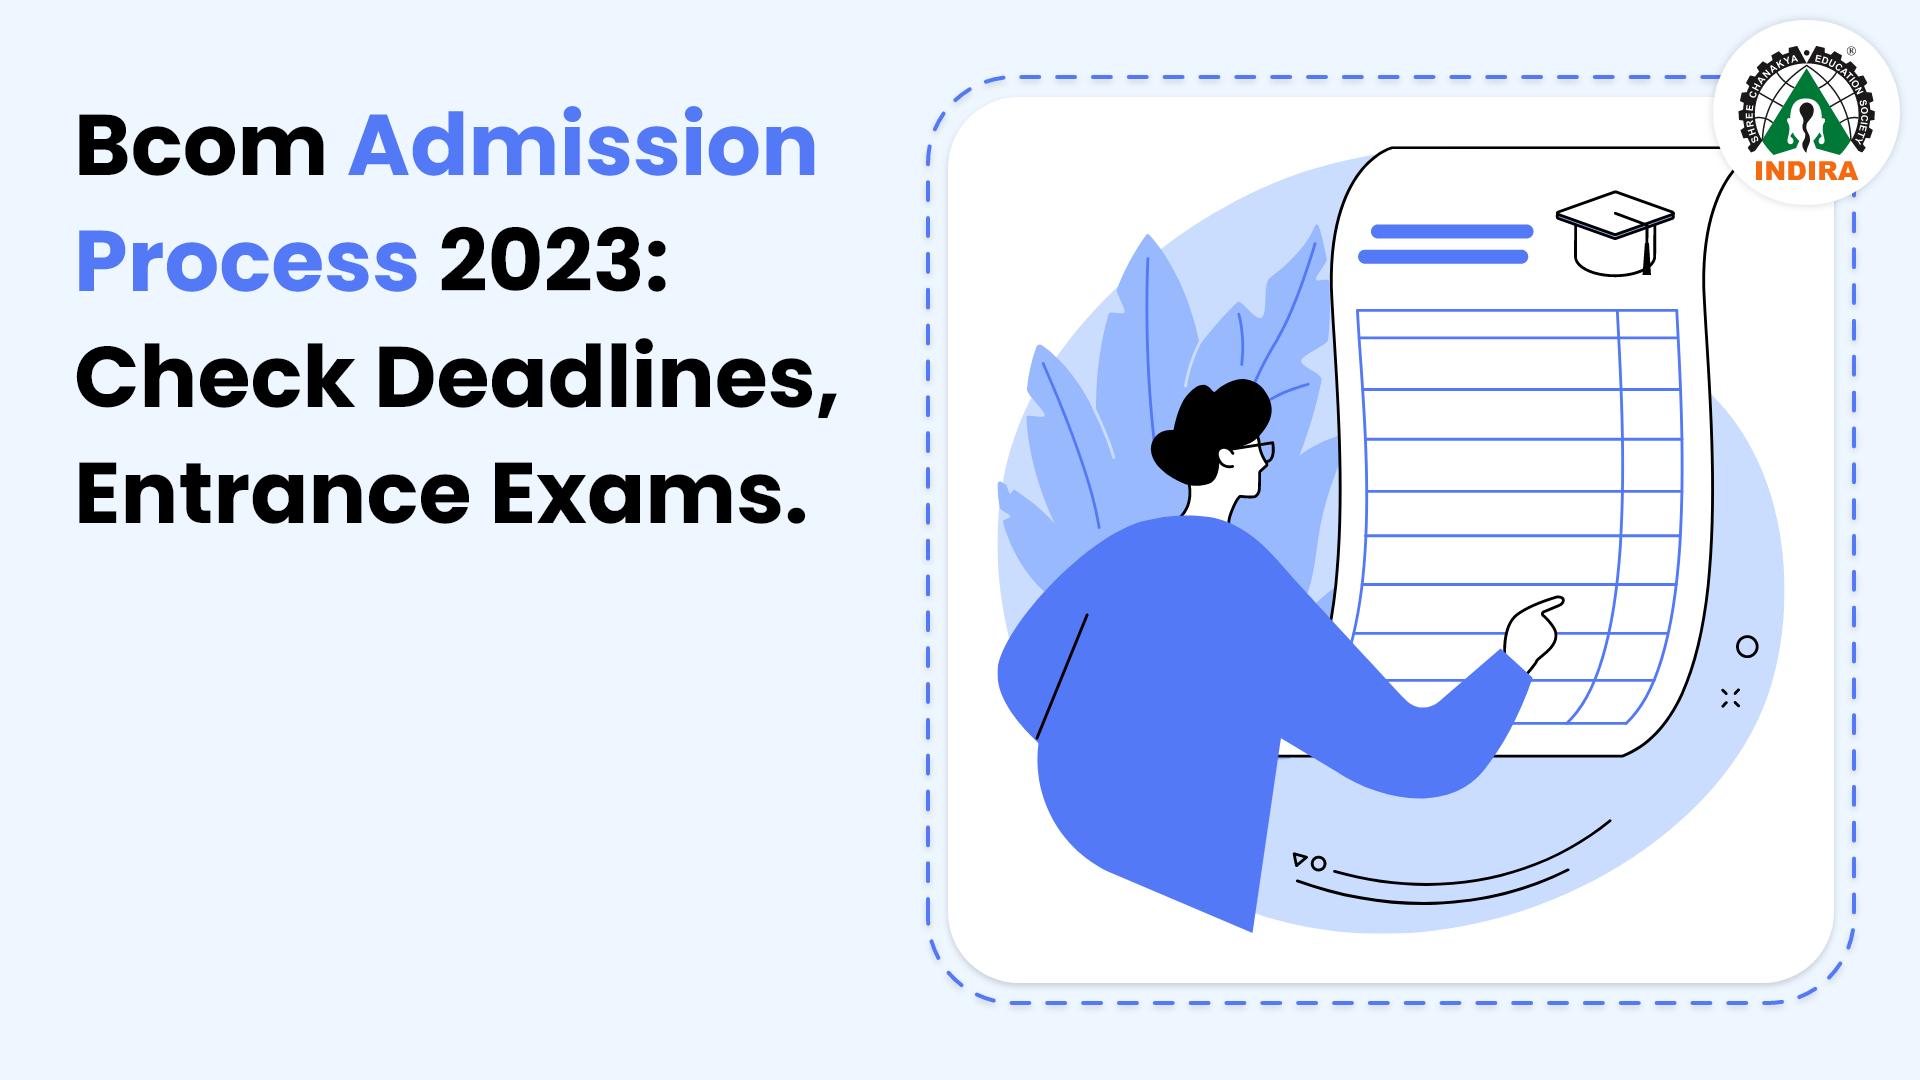 BCom Admission Process 2023: Check Deadlines, Entrance Exams.